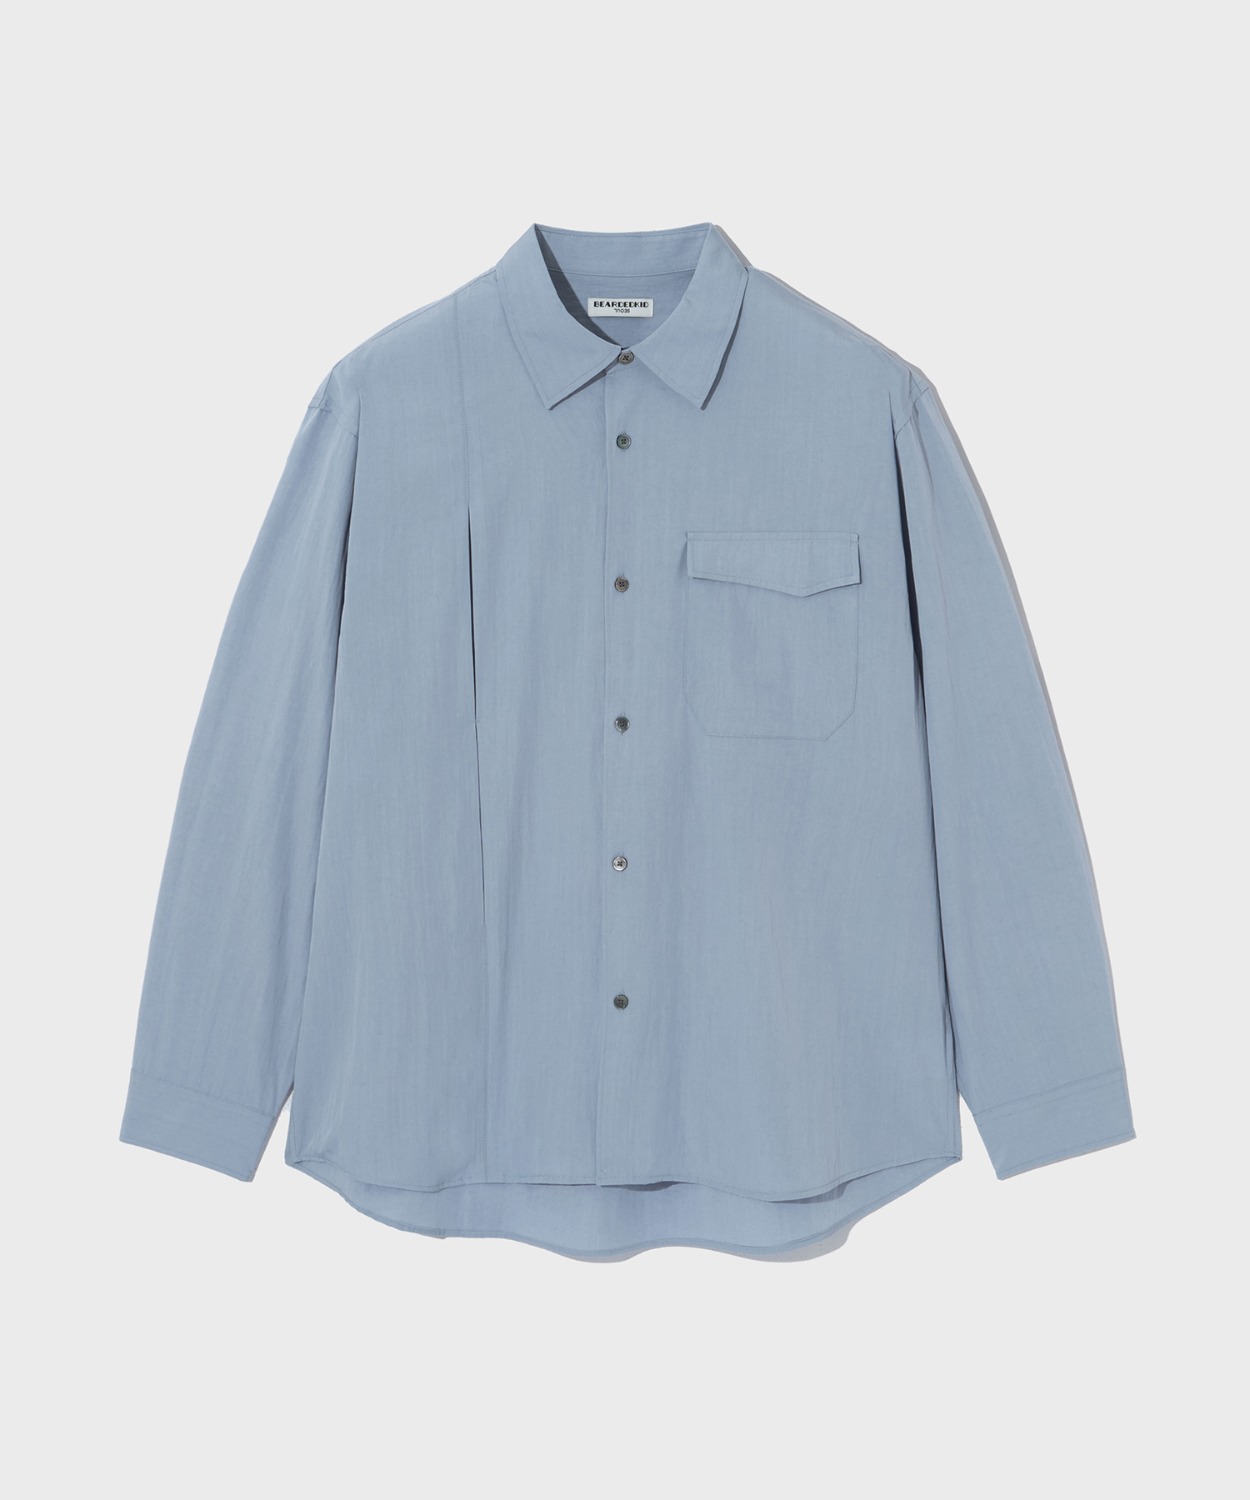 Swell Shirt_Blue Grey